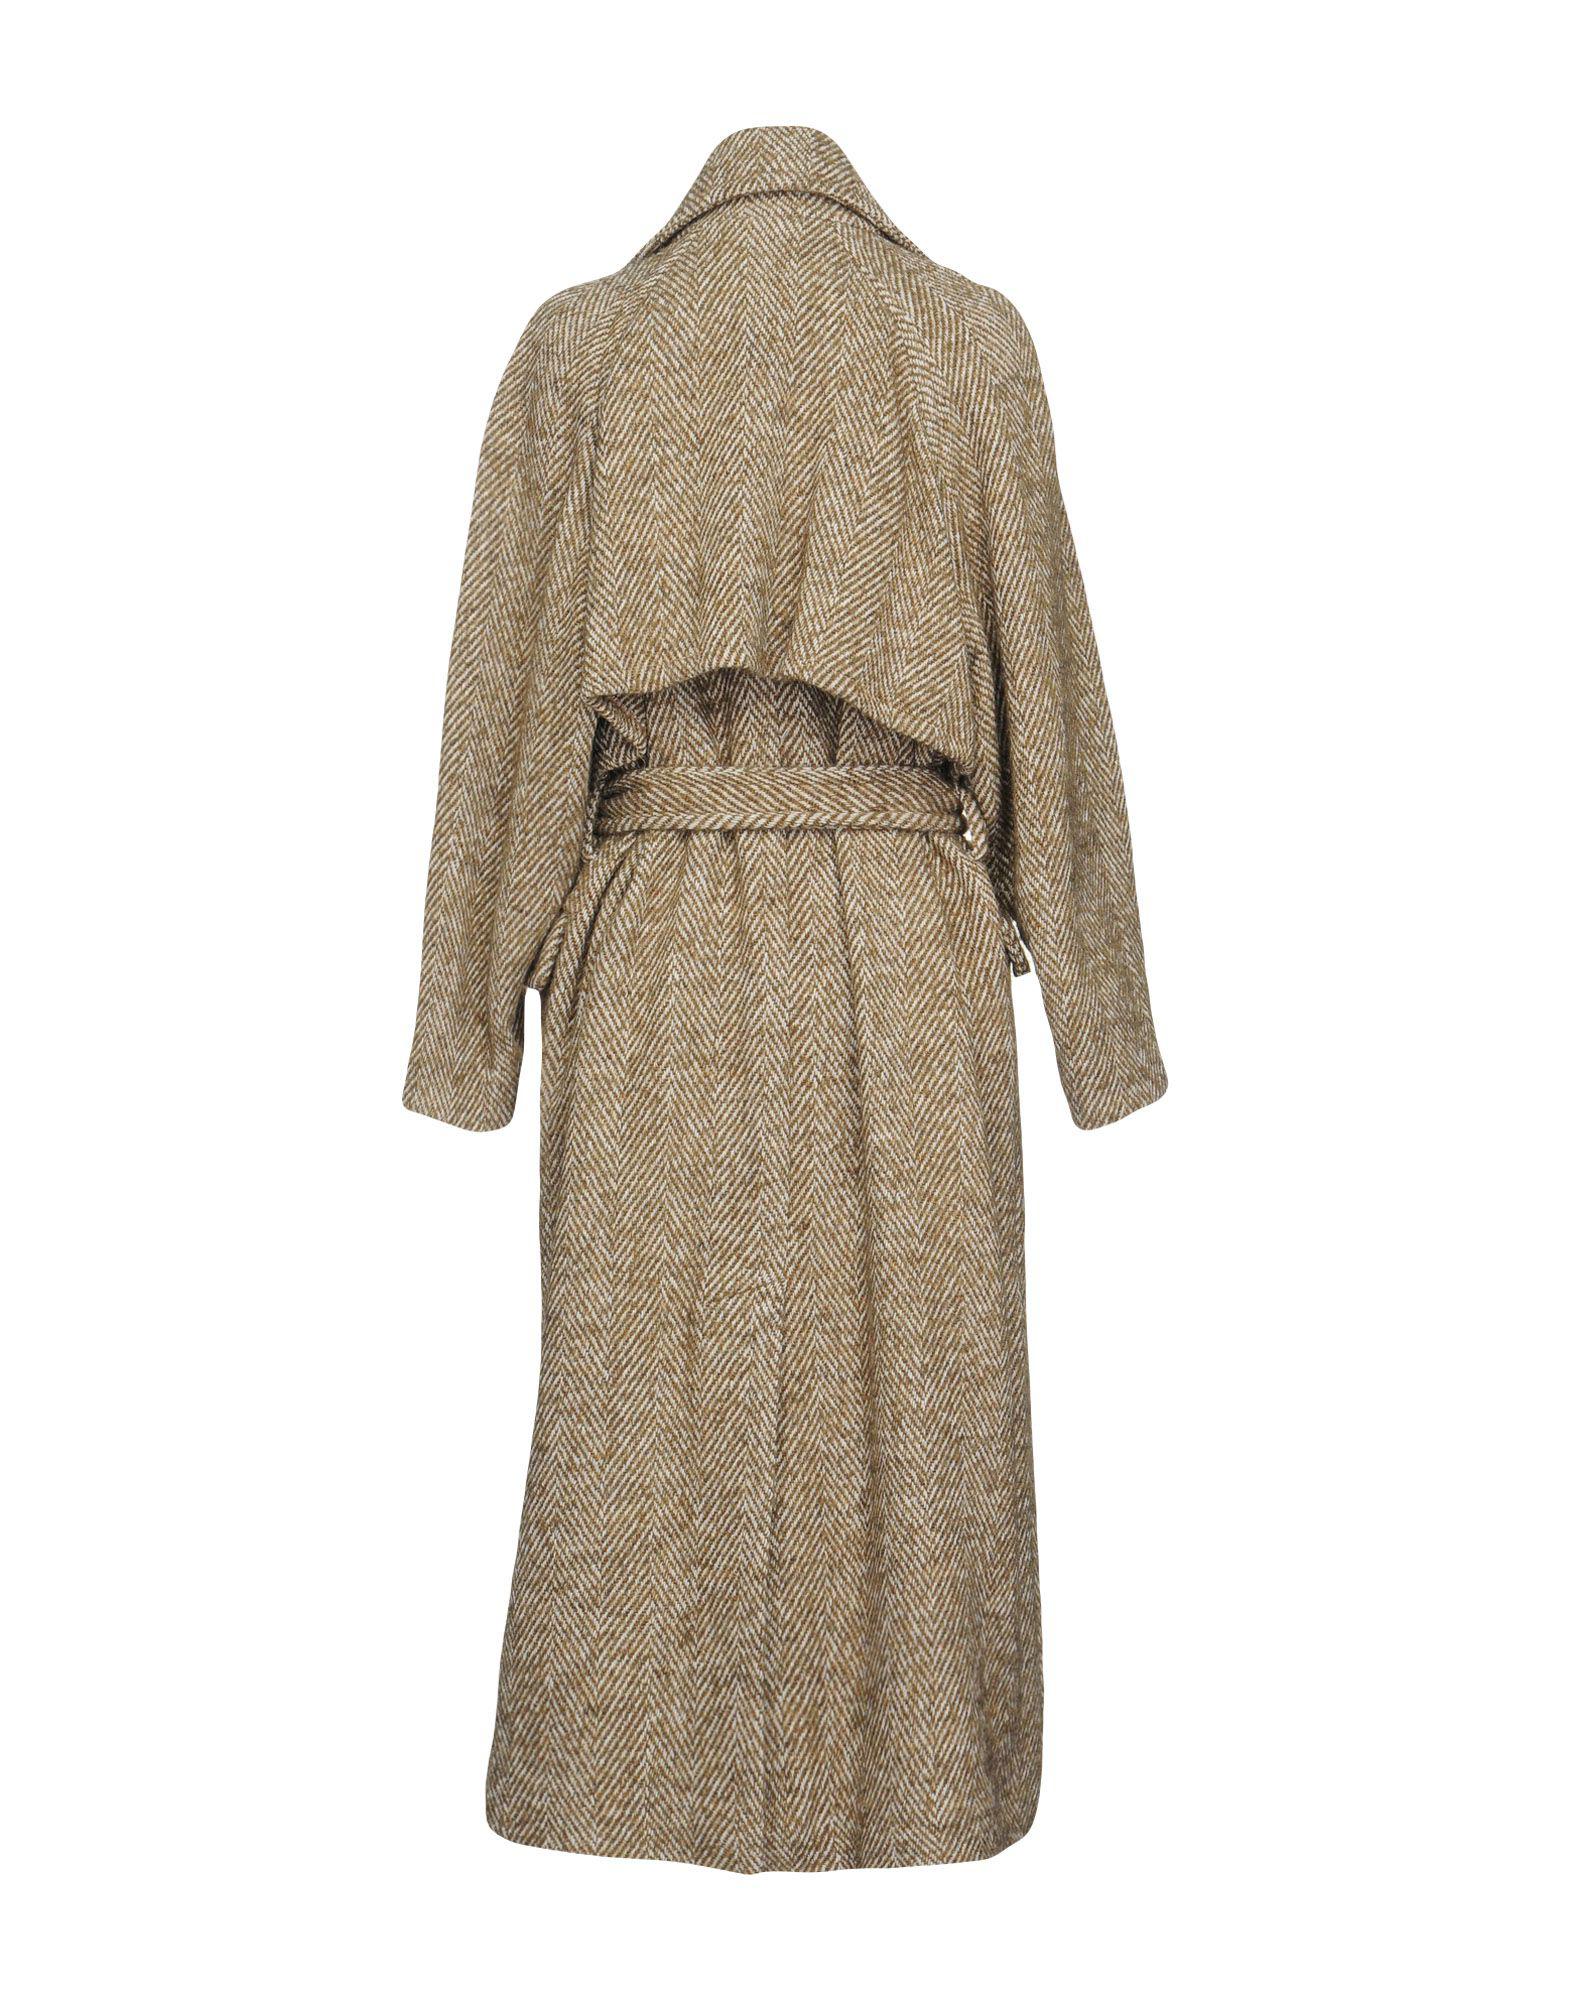 Erika Cavallini Semi Couture Tweed Coat in Beige (Natural) - Lyst